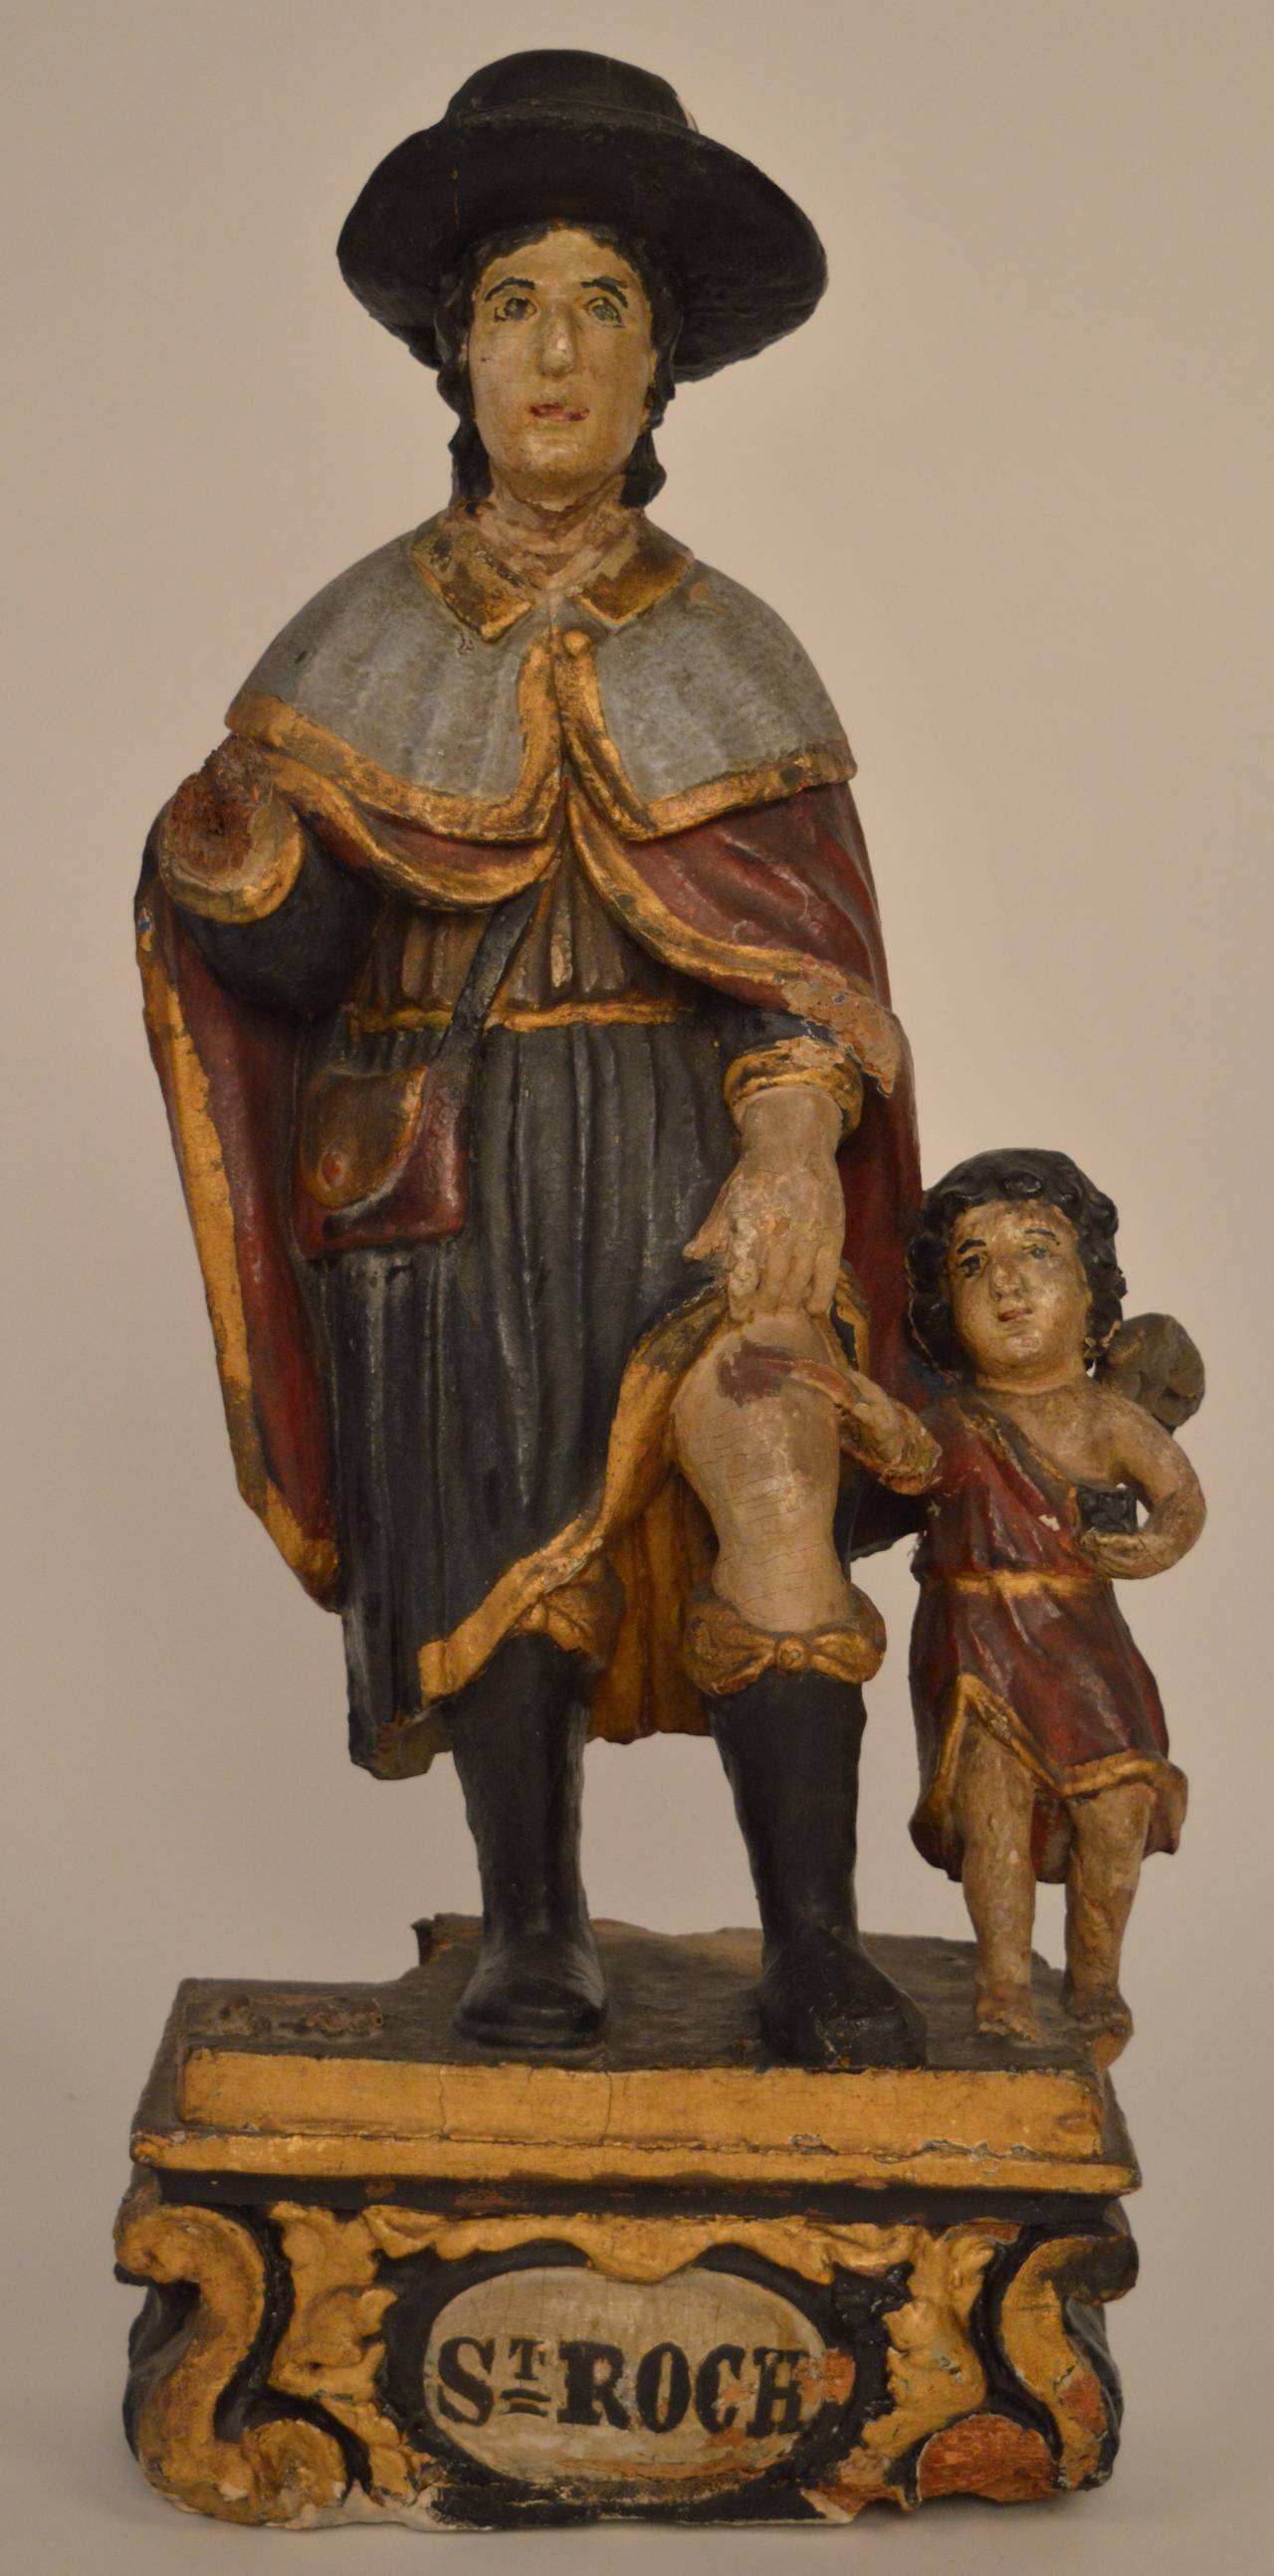 Mid 17th century Southern Italian shrine figure depicting St Roch.
This charming folk 